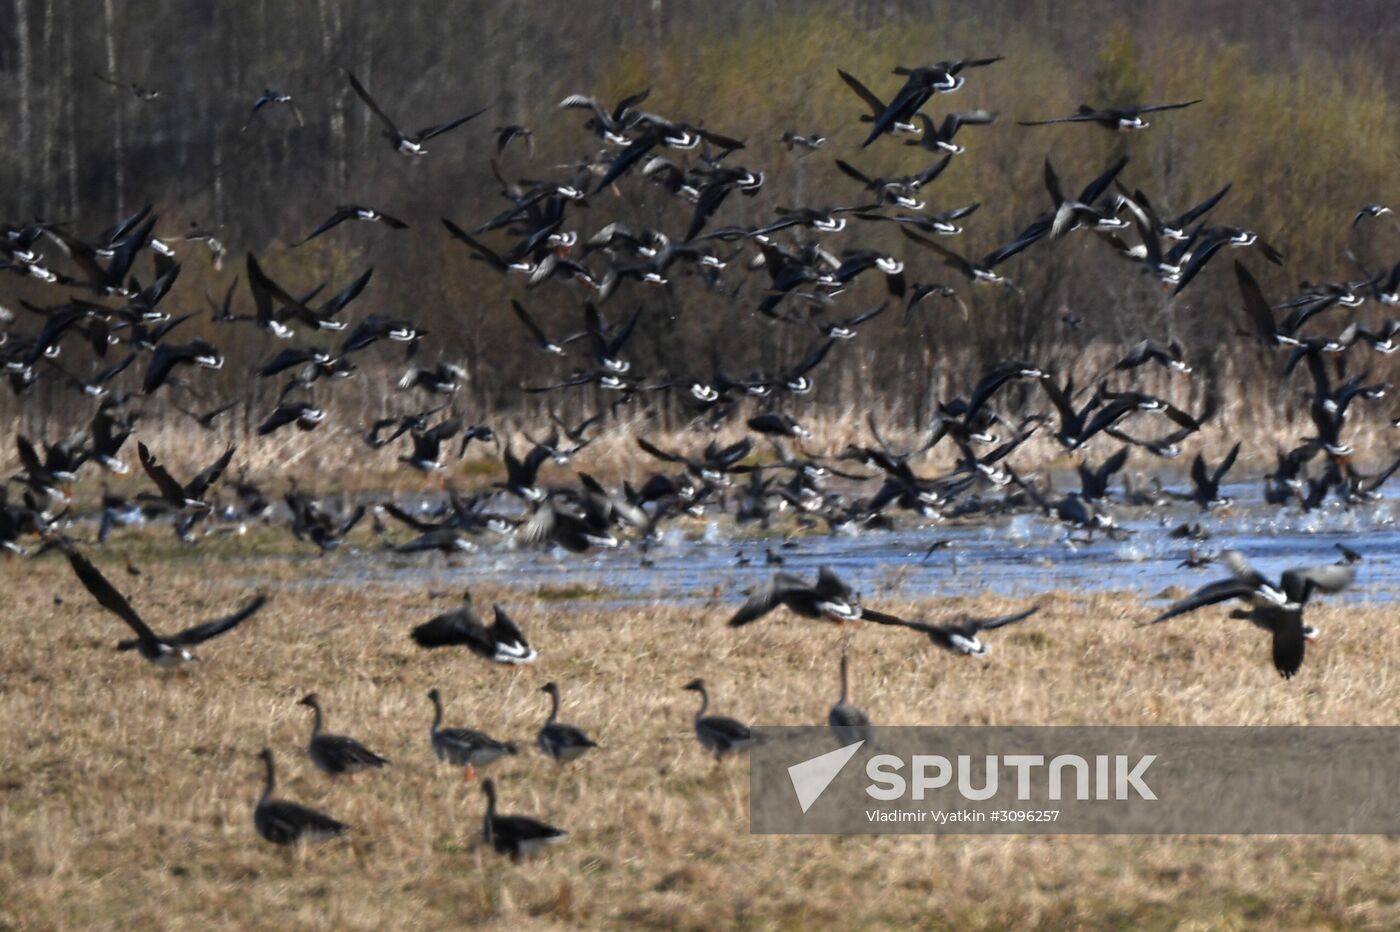 Goose reserve in the Kostroma Region